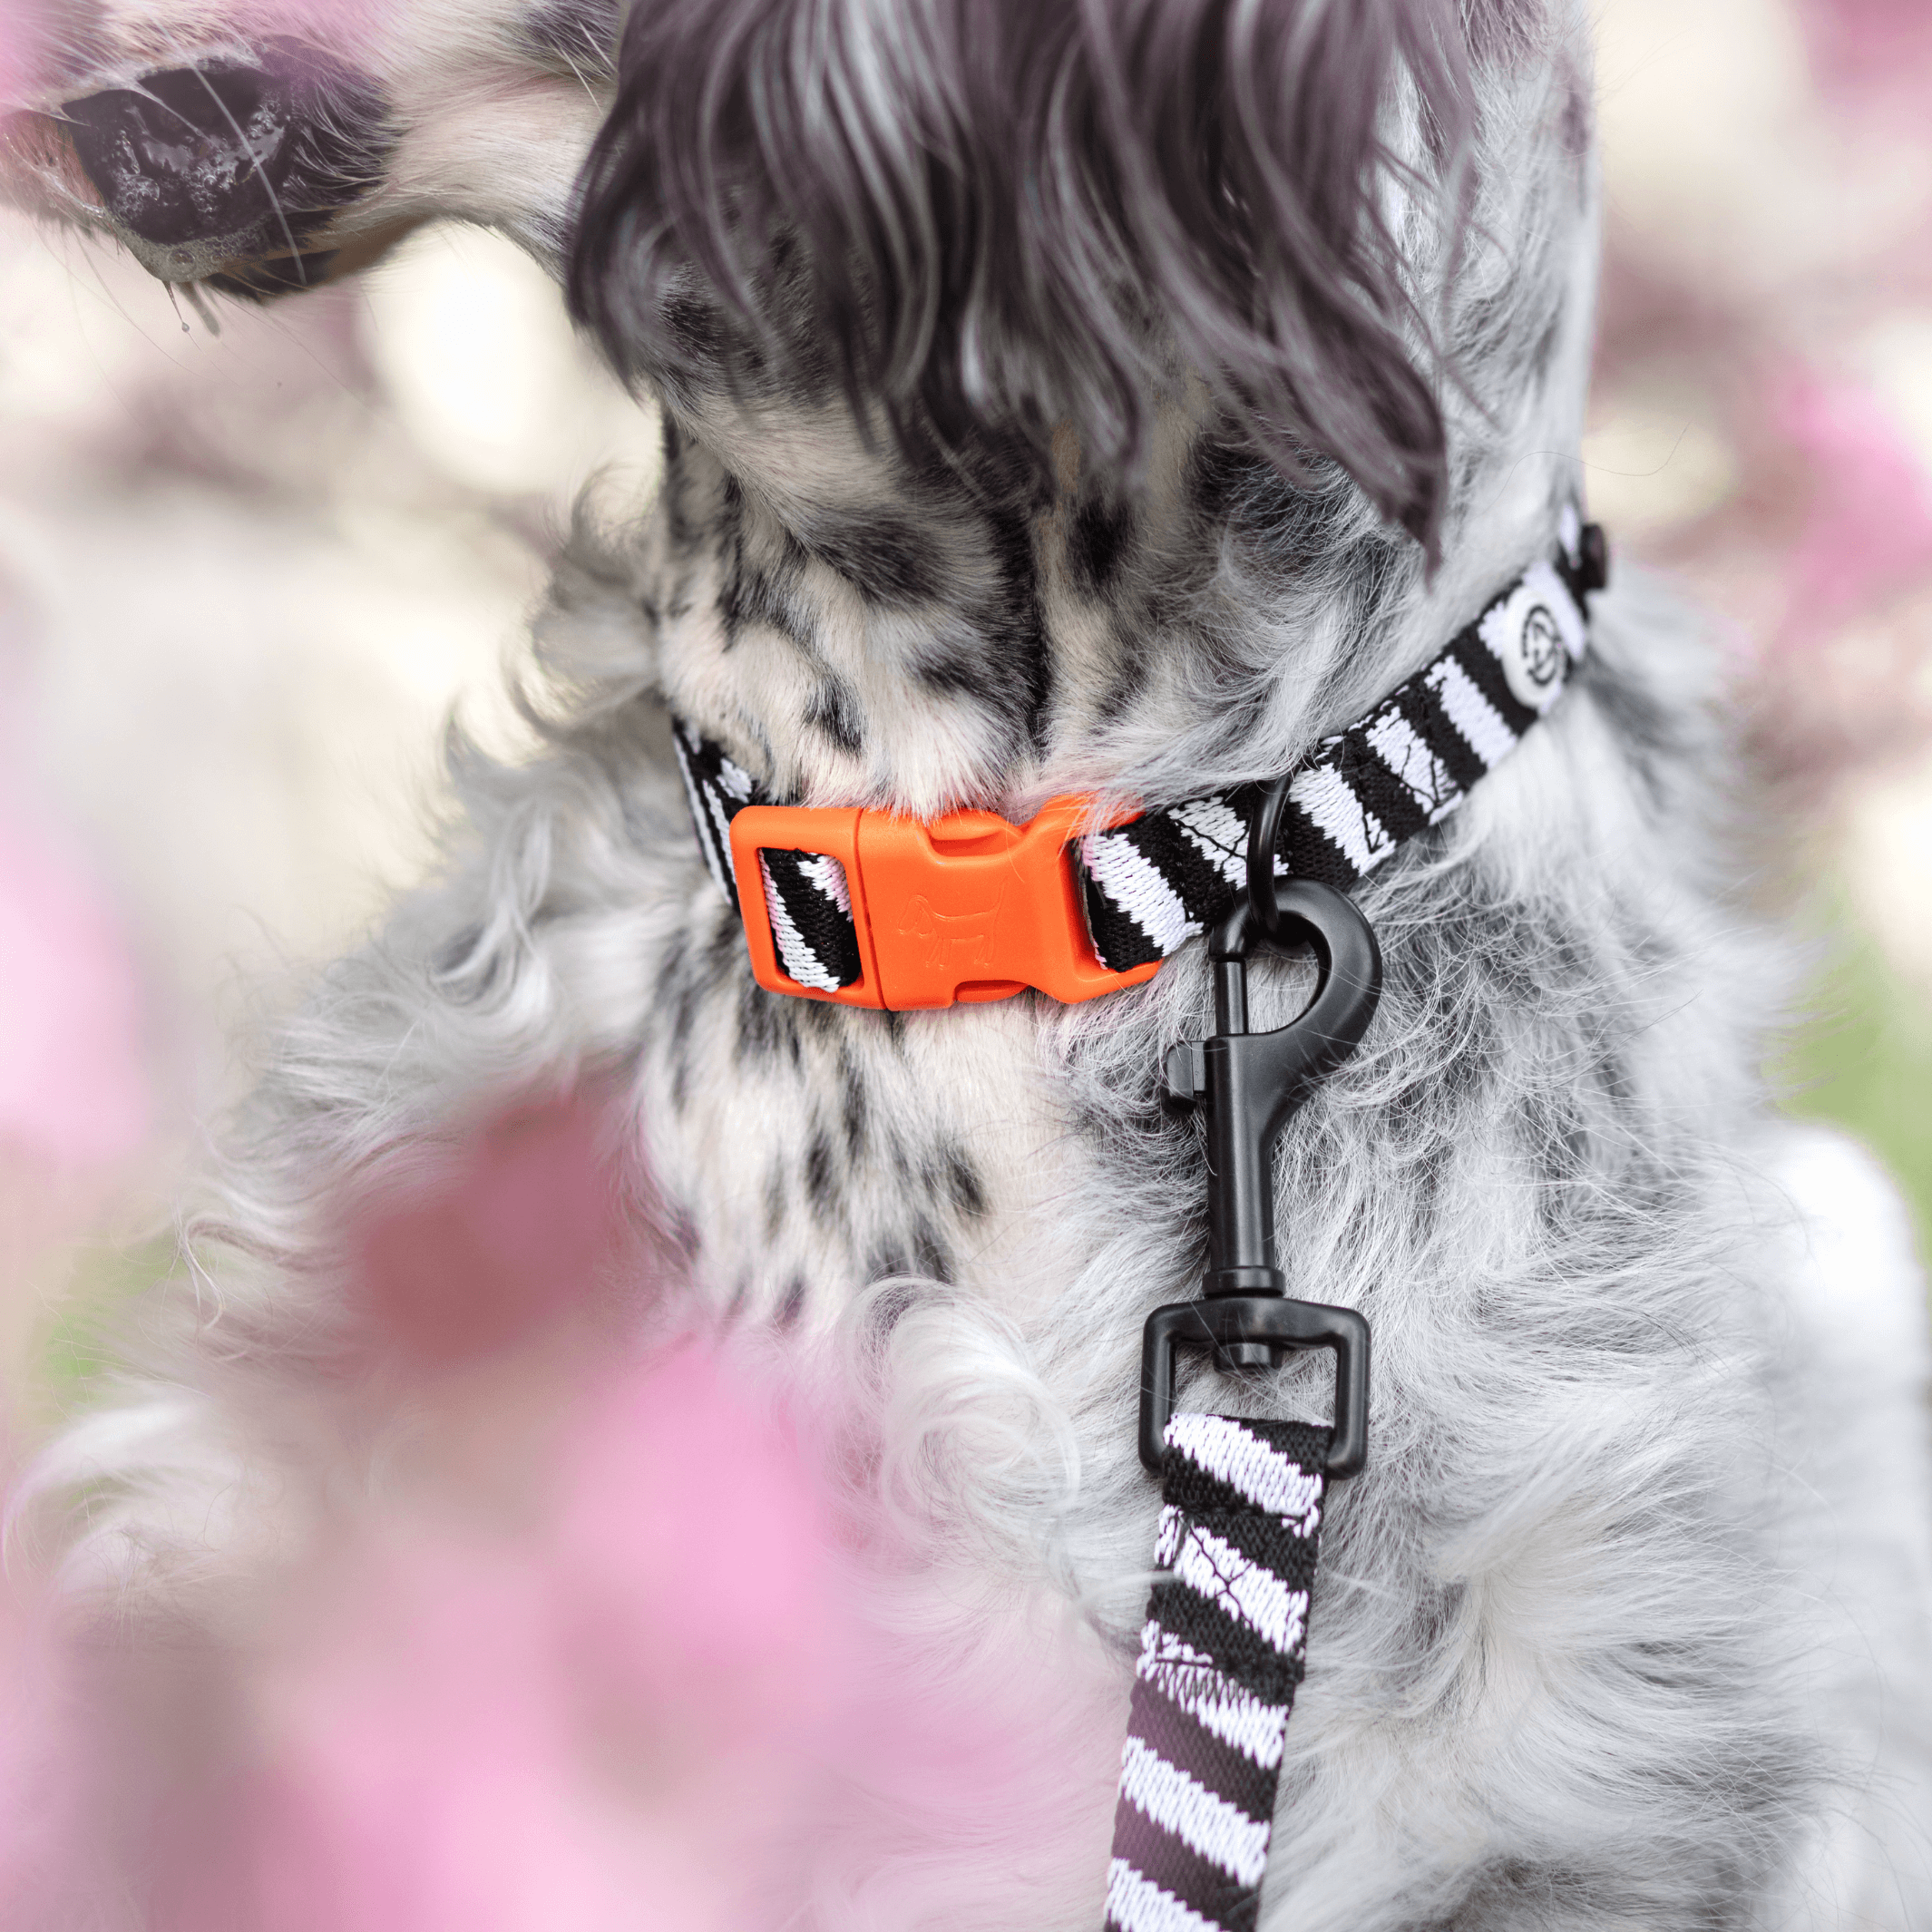 Zebra Dog Collar